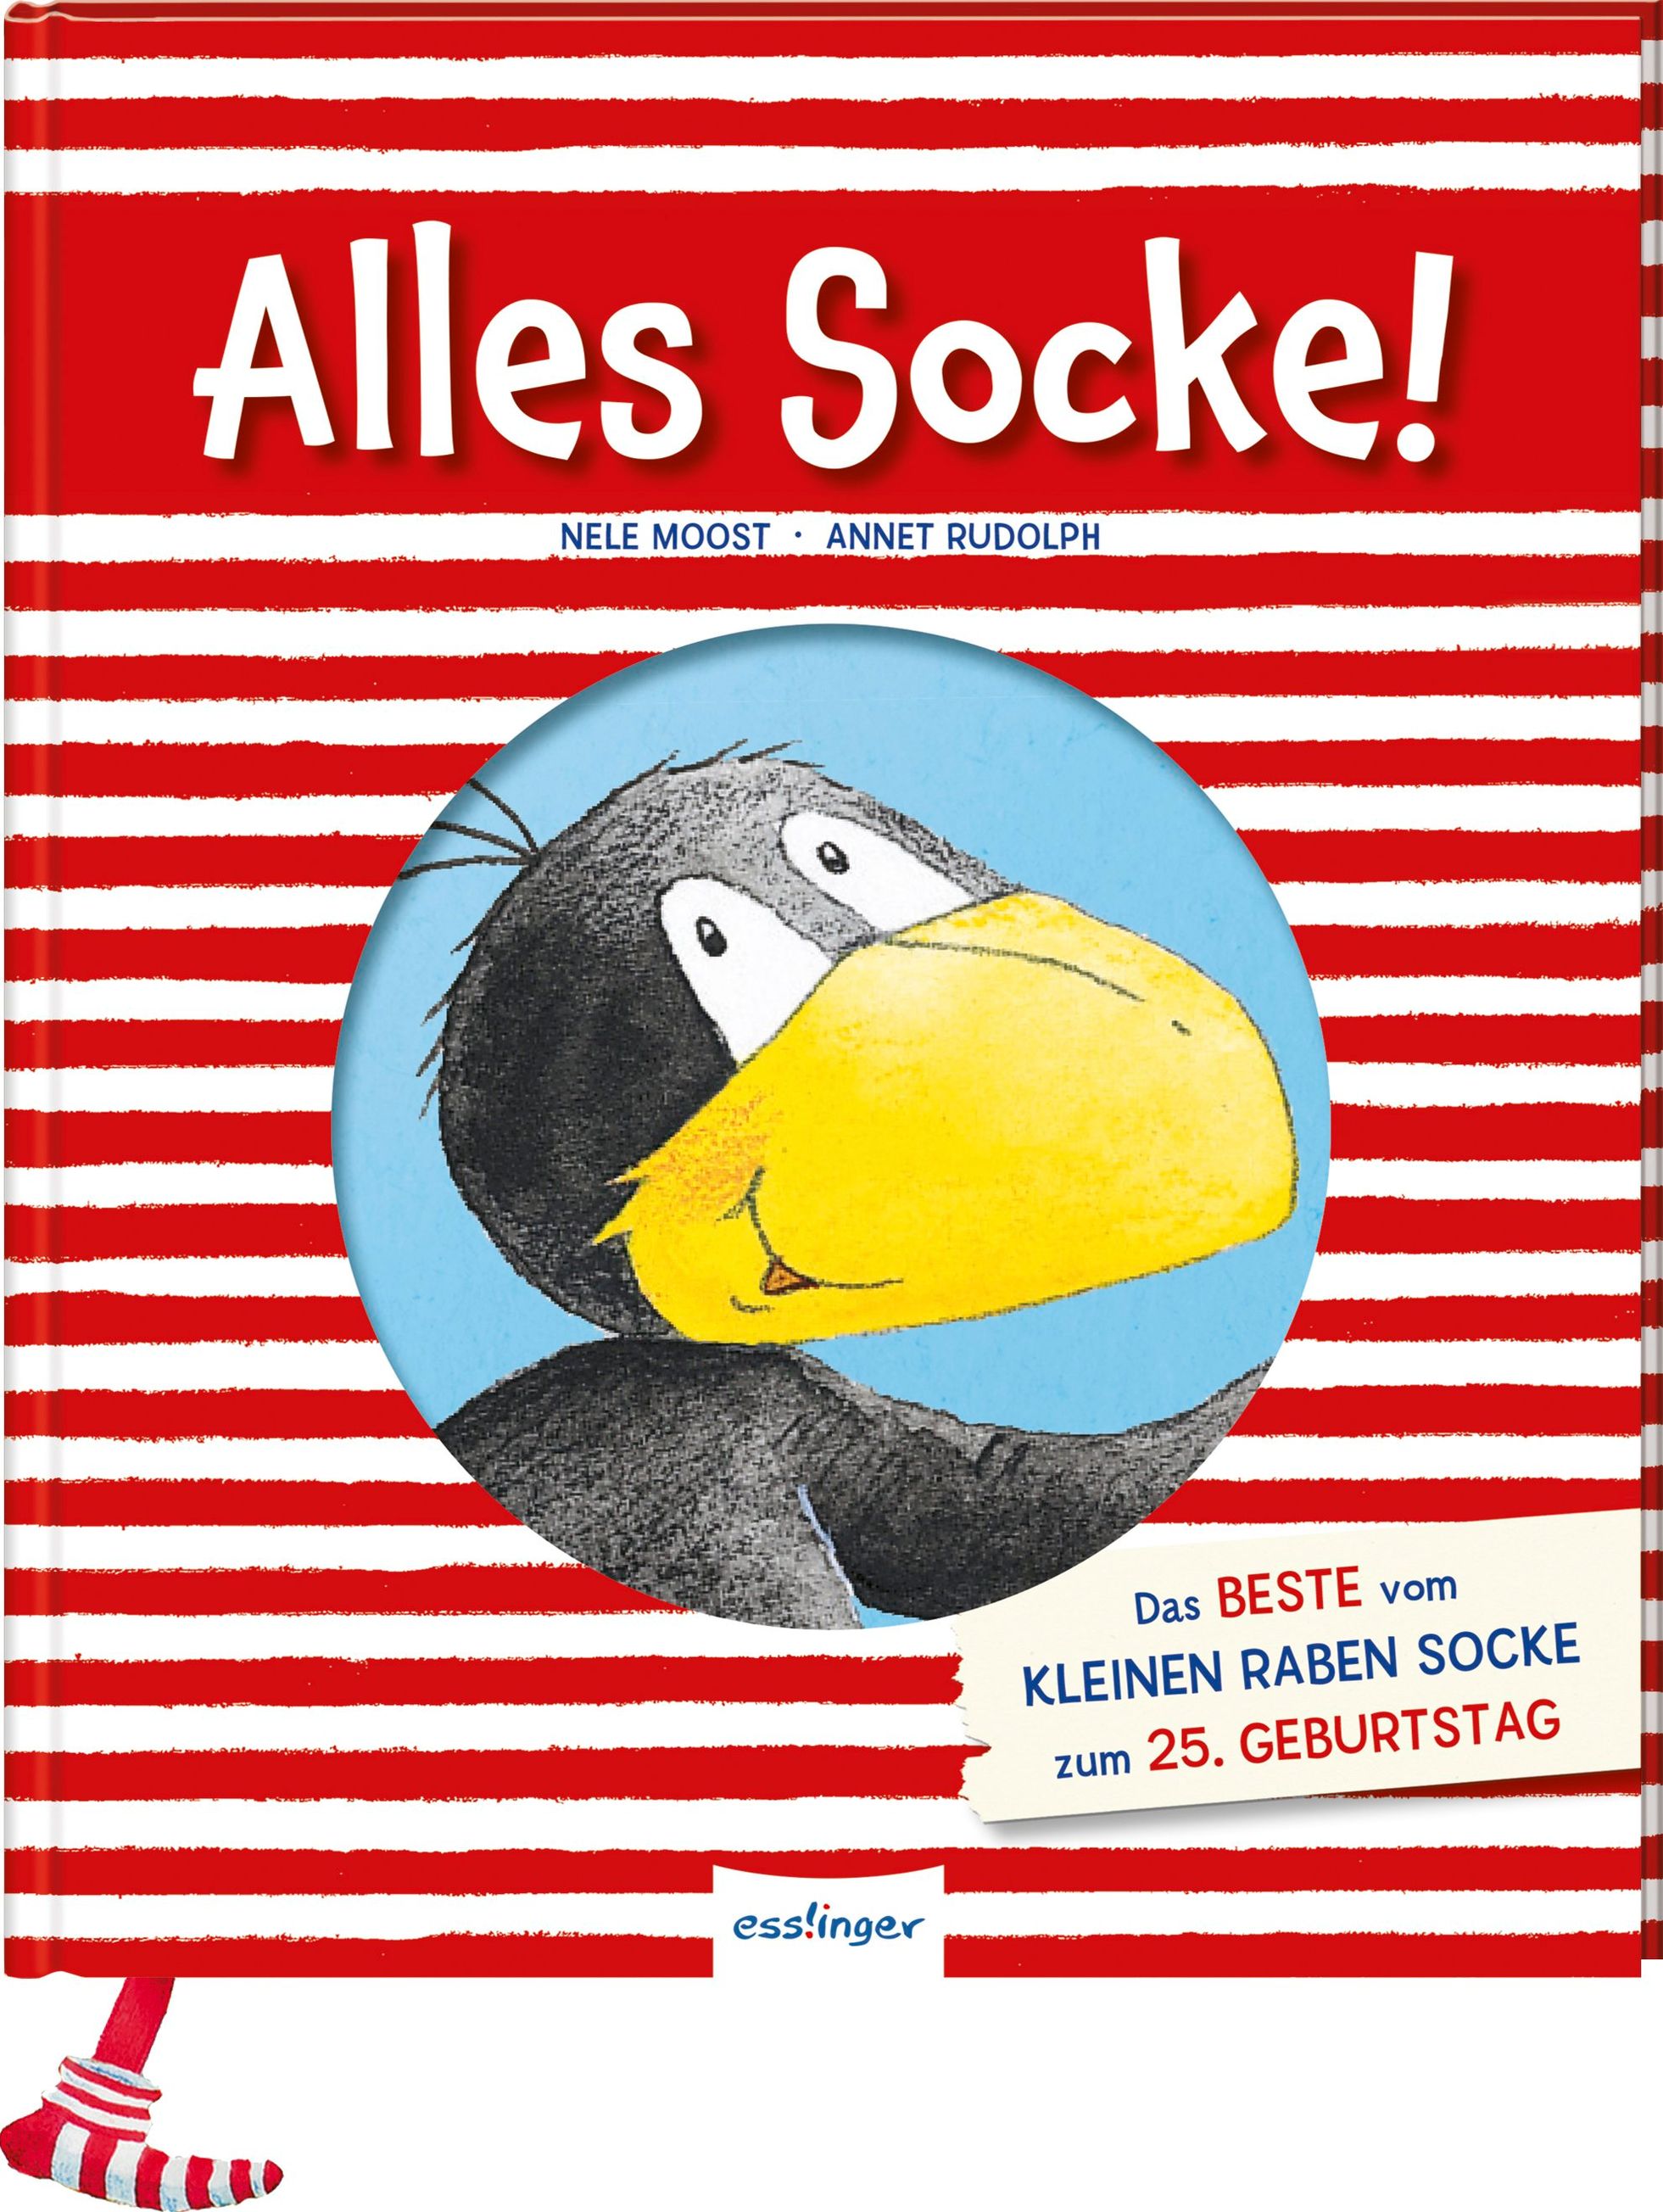 Der kleine Rabe Socke Der kleine Rabe Socke: Alles Socke! Buch